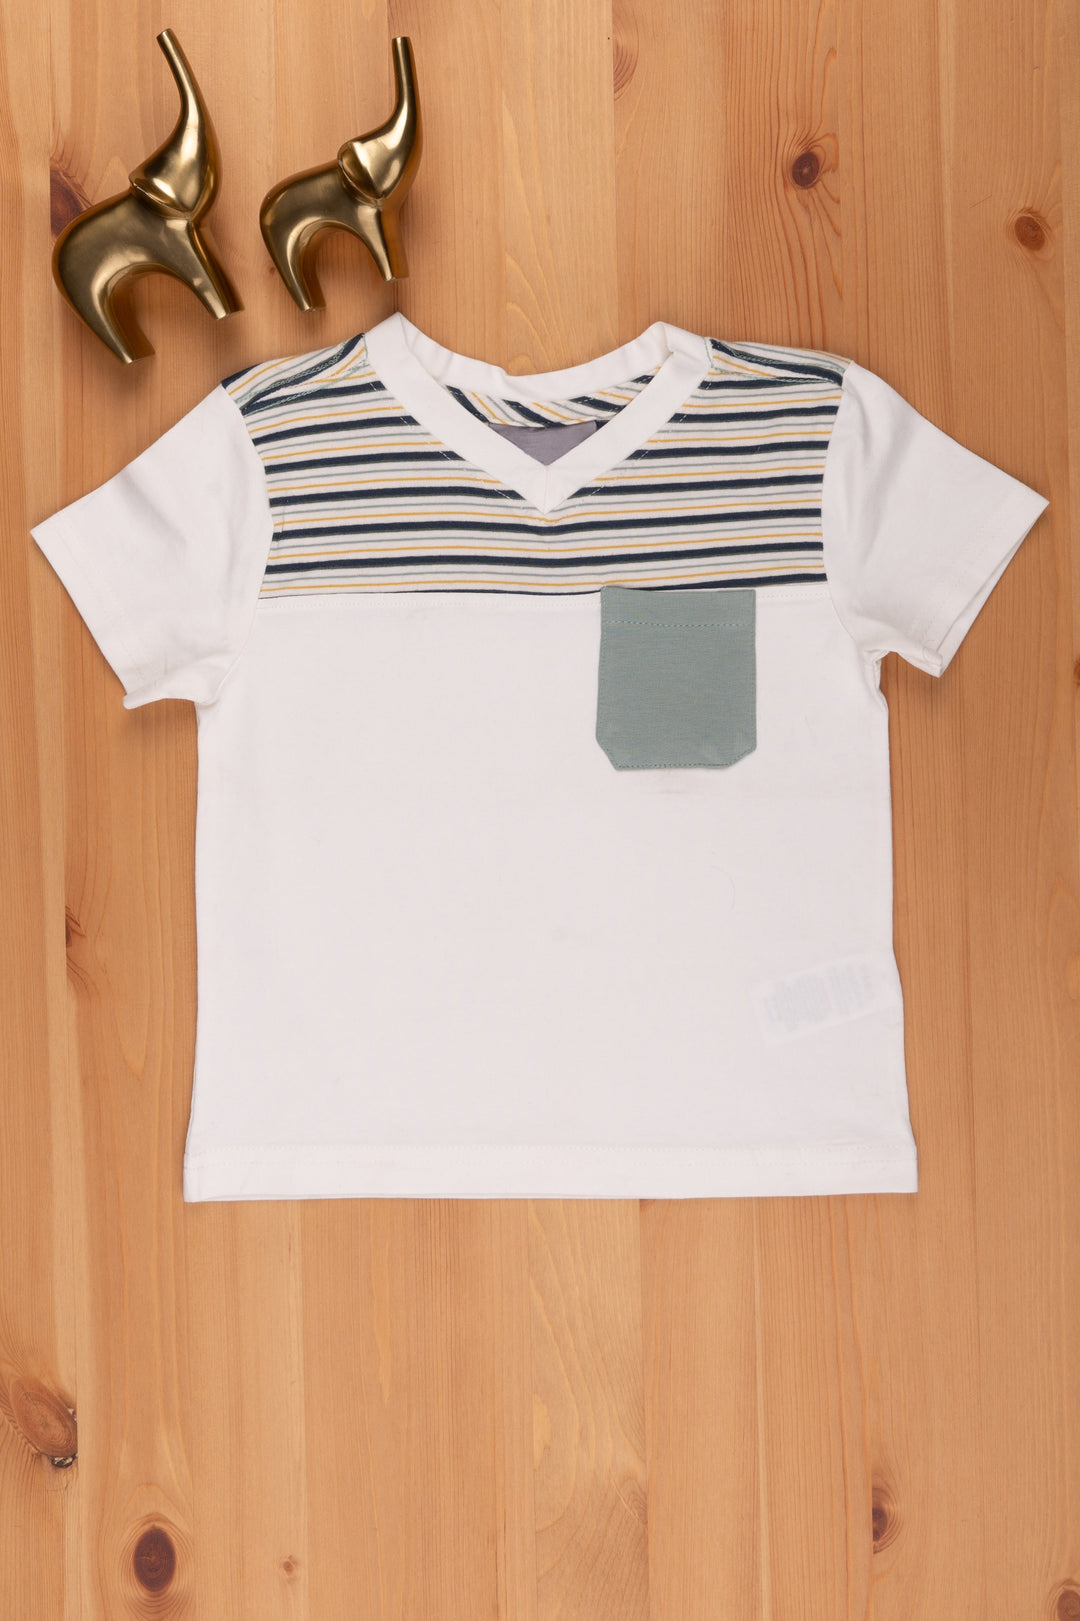 The Nesavu Boys T Shirt Unisex T-Shirt for Kids Express Their Personal Style psr silks Nesavu 16 (1Y) / White LTP003